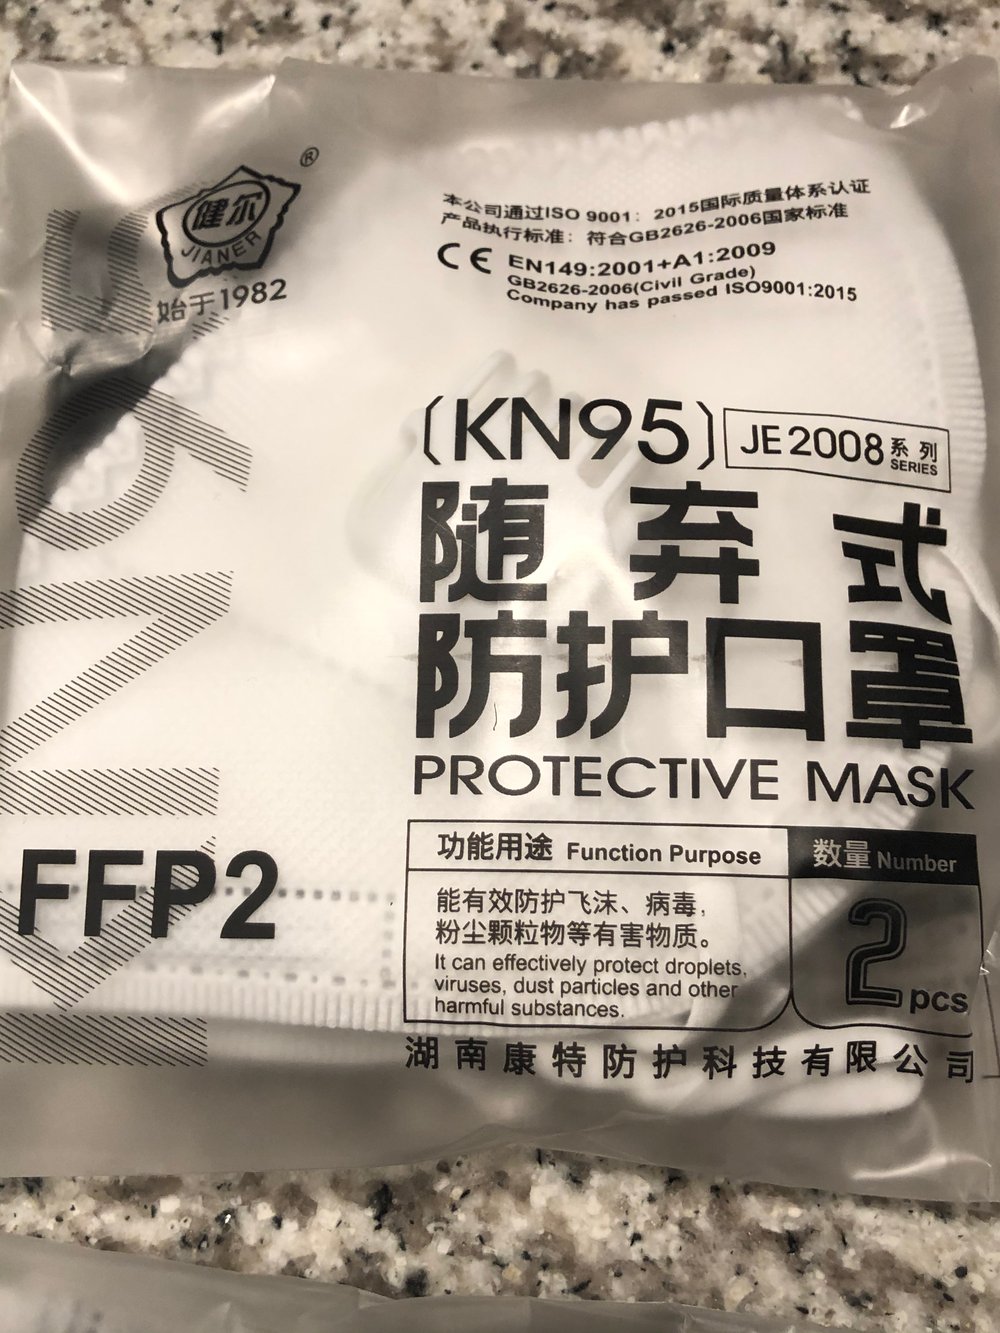 K95 mask pack of 2 